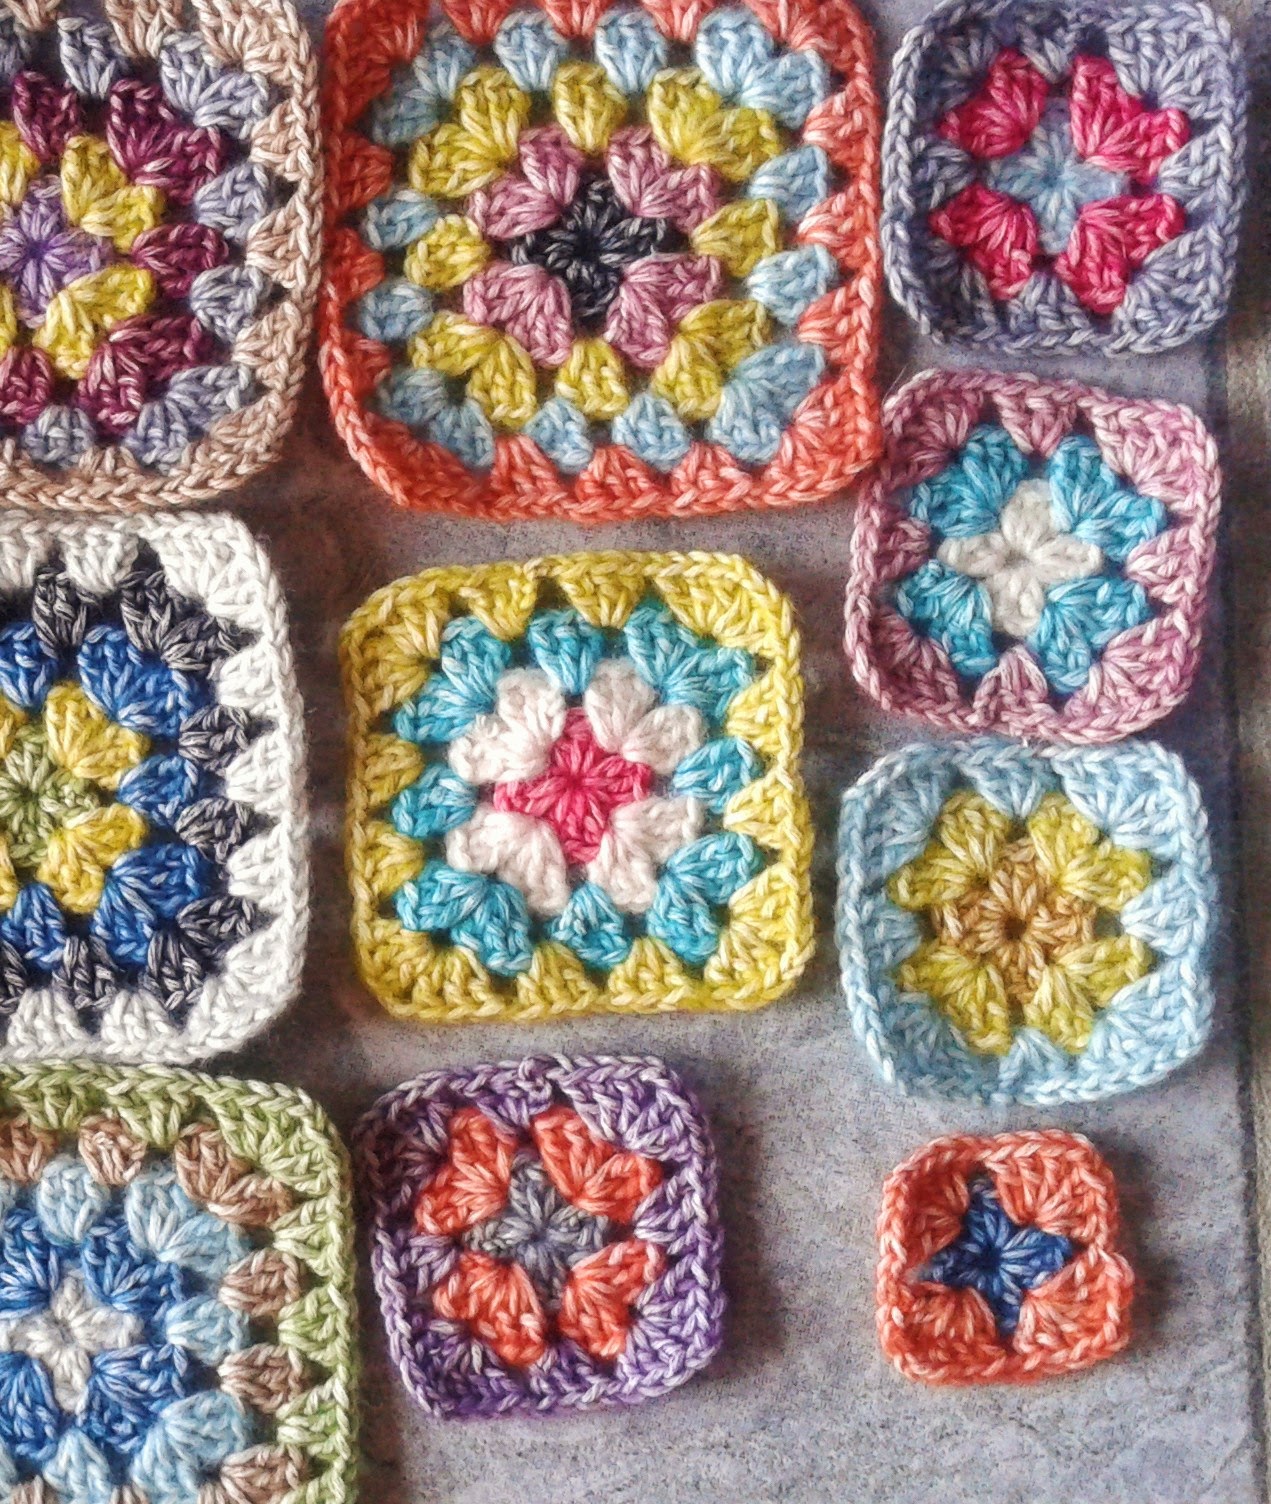 funkycrochet: A colourful Granny Square Crochet Bag, some nice New Yarn ...